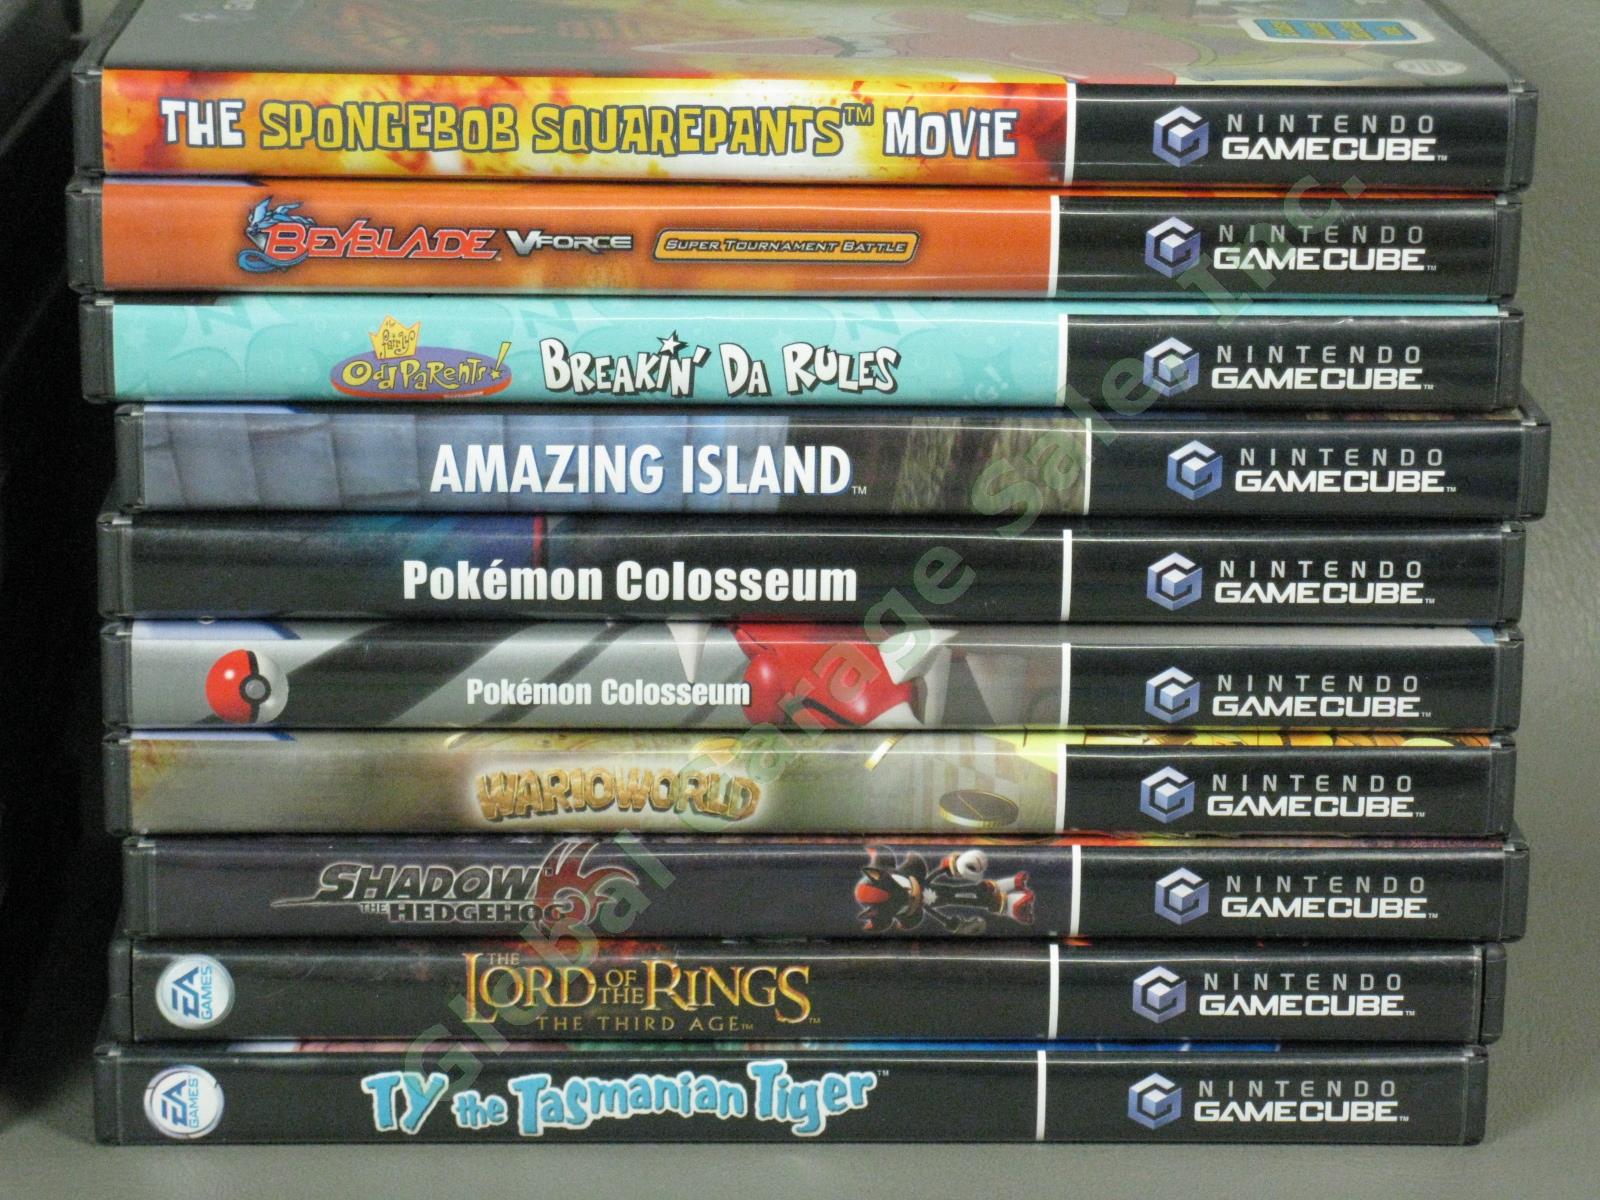 Nintendo Gamecube +DS Video Game Lot Tony Hawk Pokemon Mario Kart Harry Potter + 2